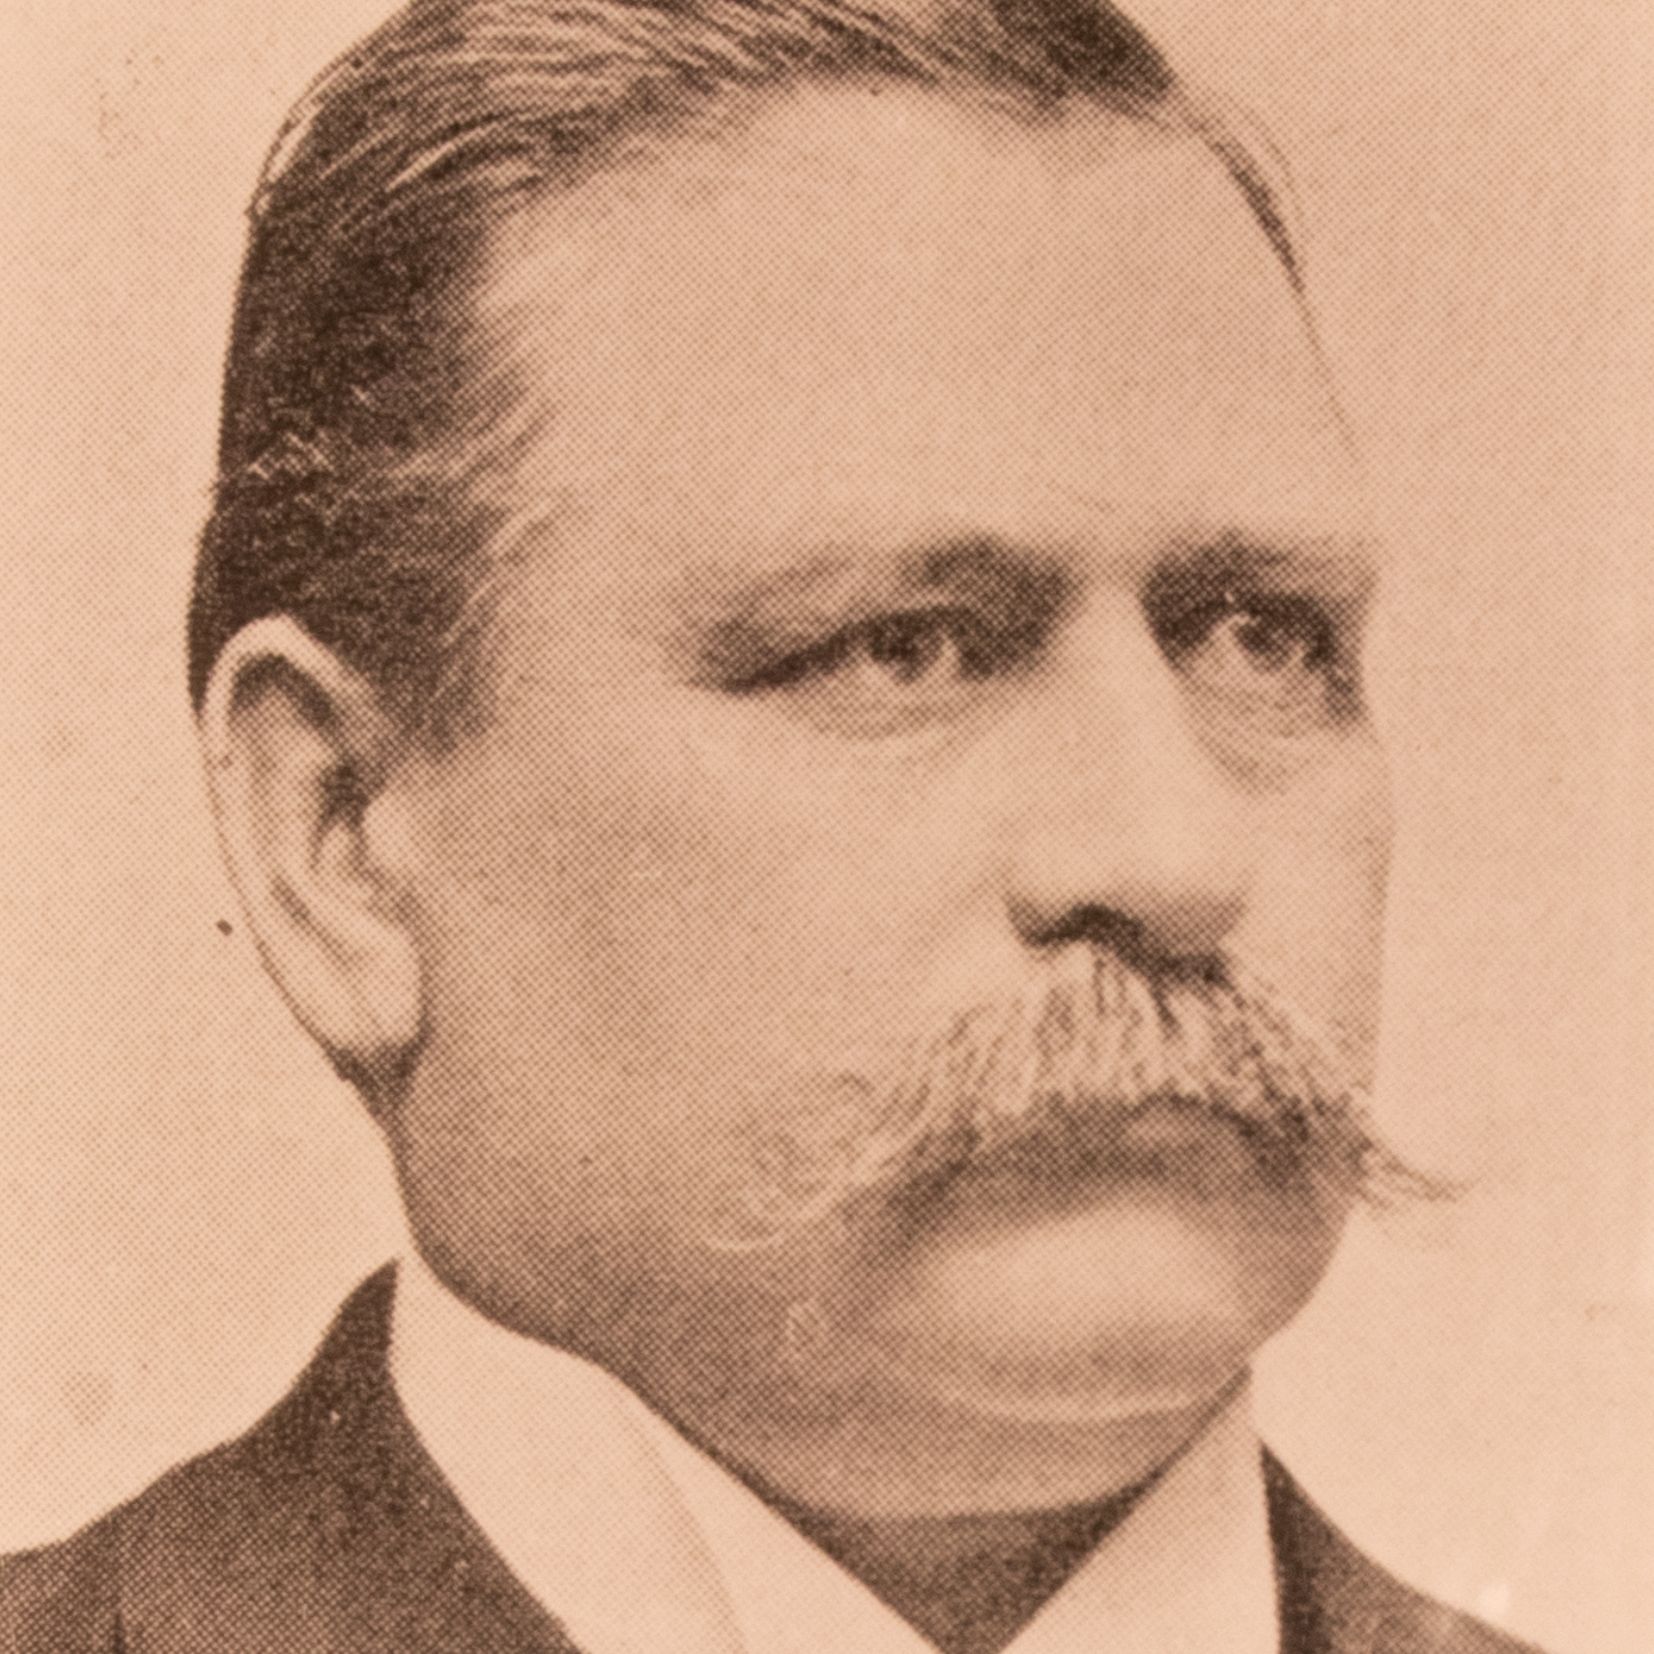 Mayor William E. Racker